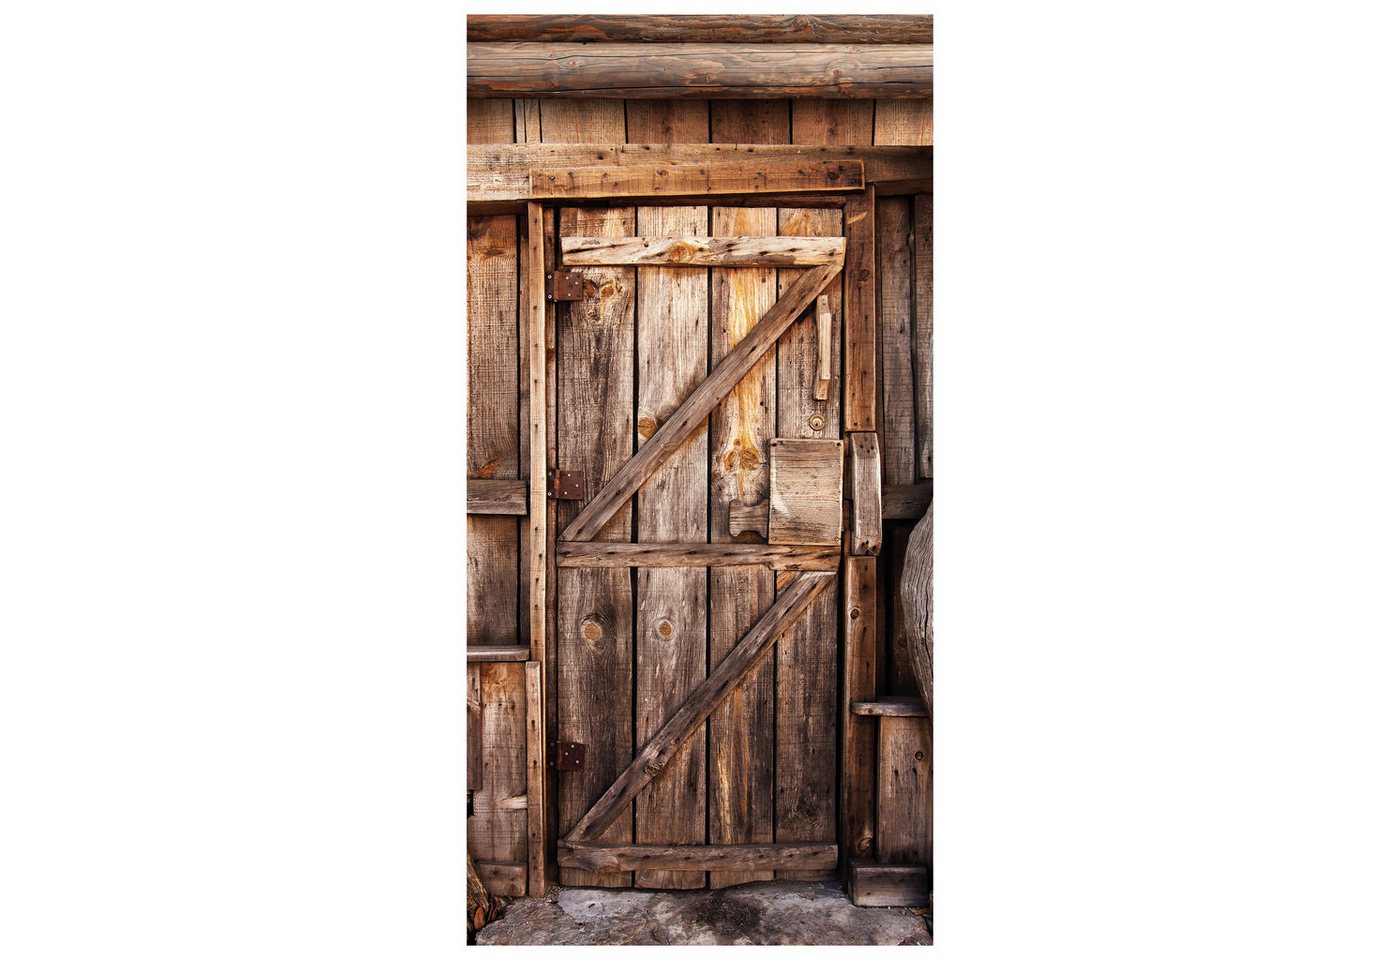 wandmotiv24 Türtapete Holztür, Holz Haus, Scheune, Schloss, strukturiert, Fototapete, Wandtapete, Motivtapete, matt, selbstklebende Vinyltapete von wandmotiv24